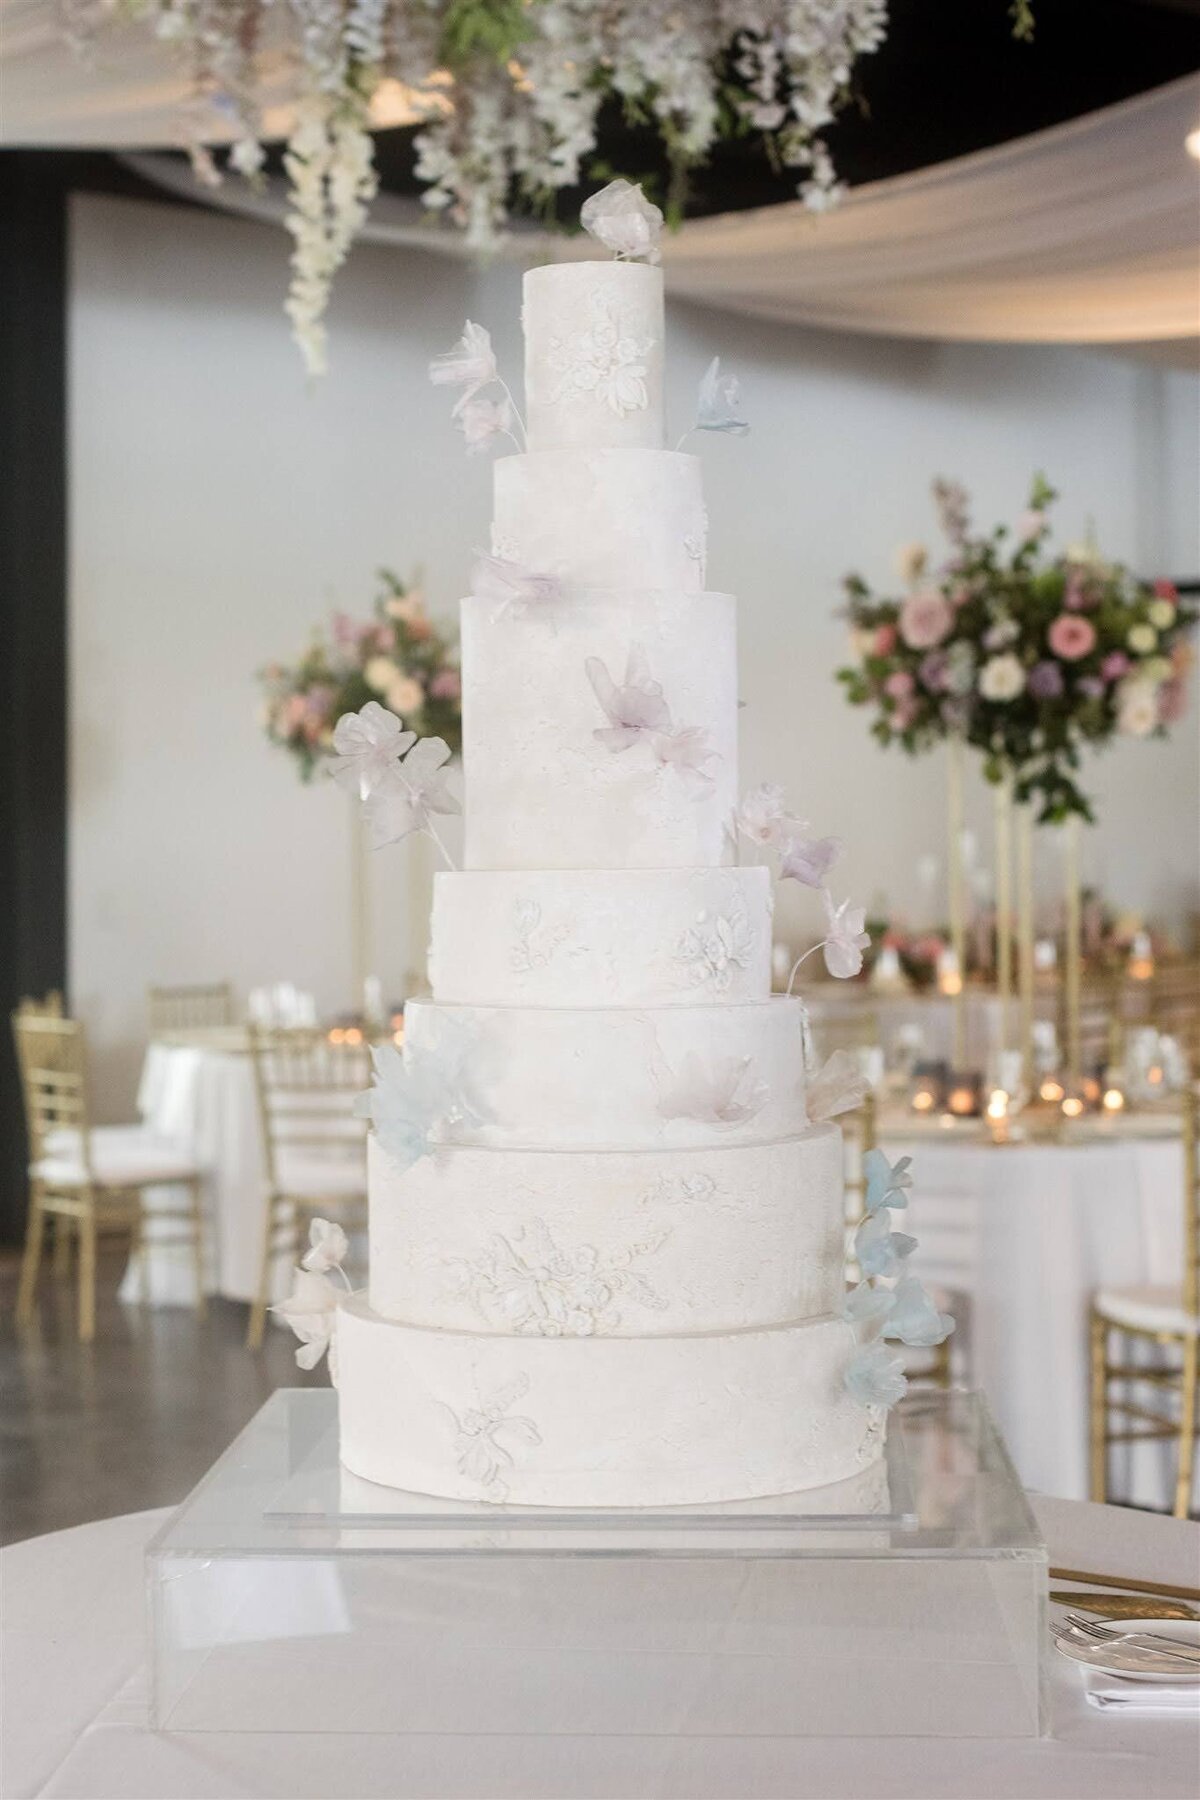 Seven tier wedding cake white wedding cake